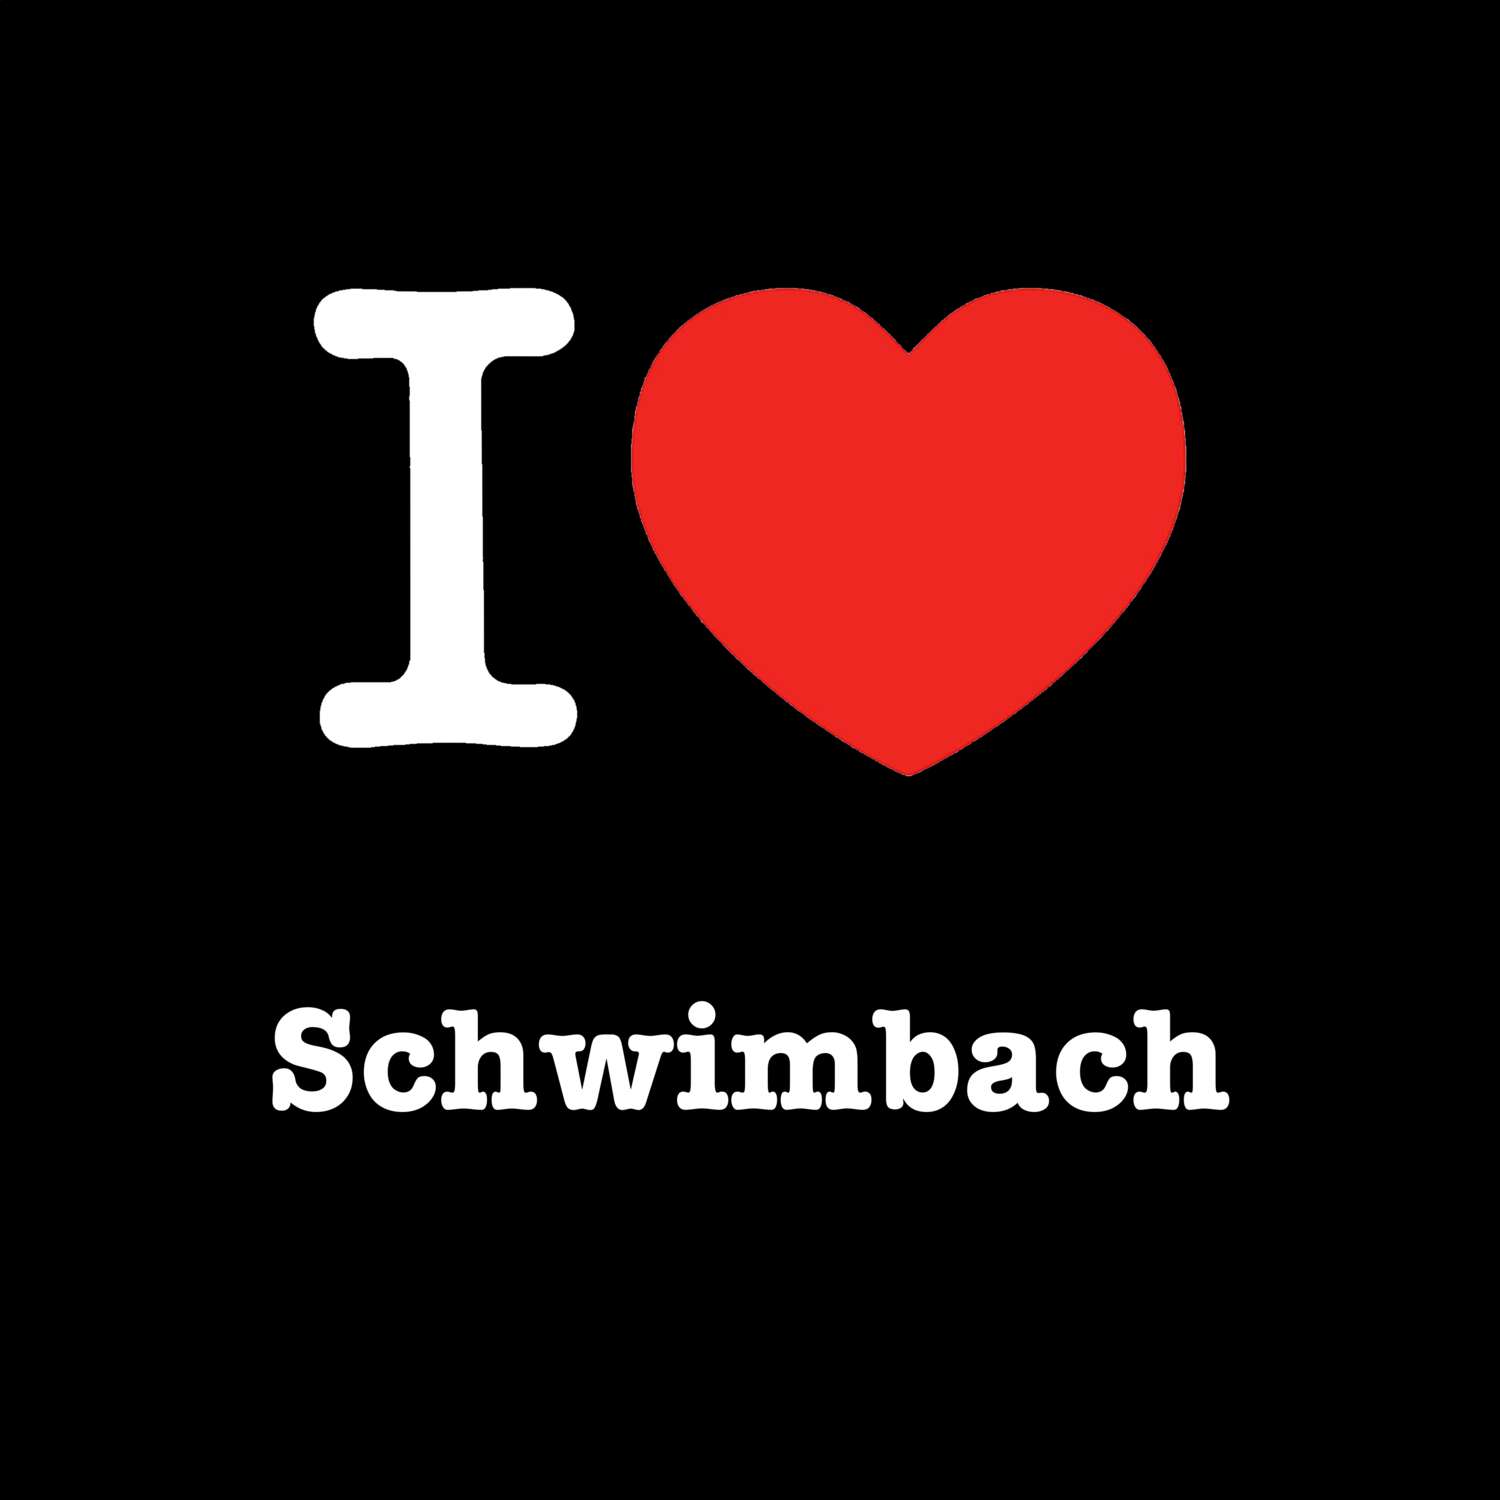 Schwimbach T-Shirt »I love«